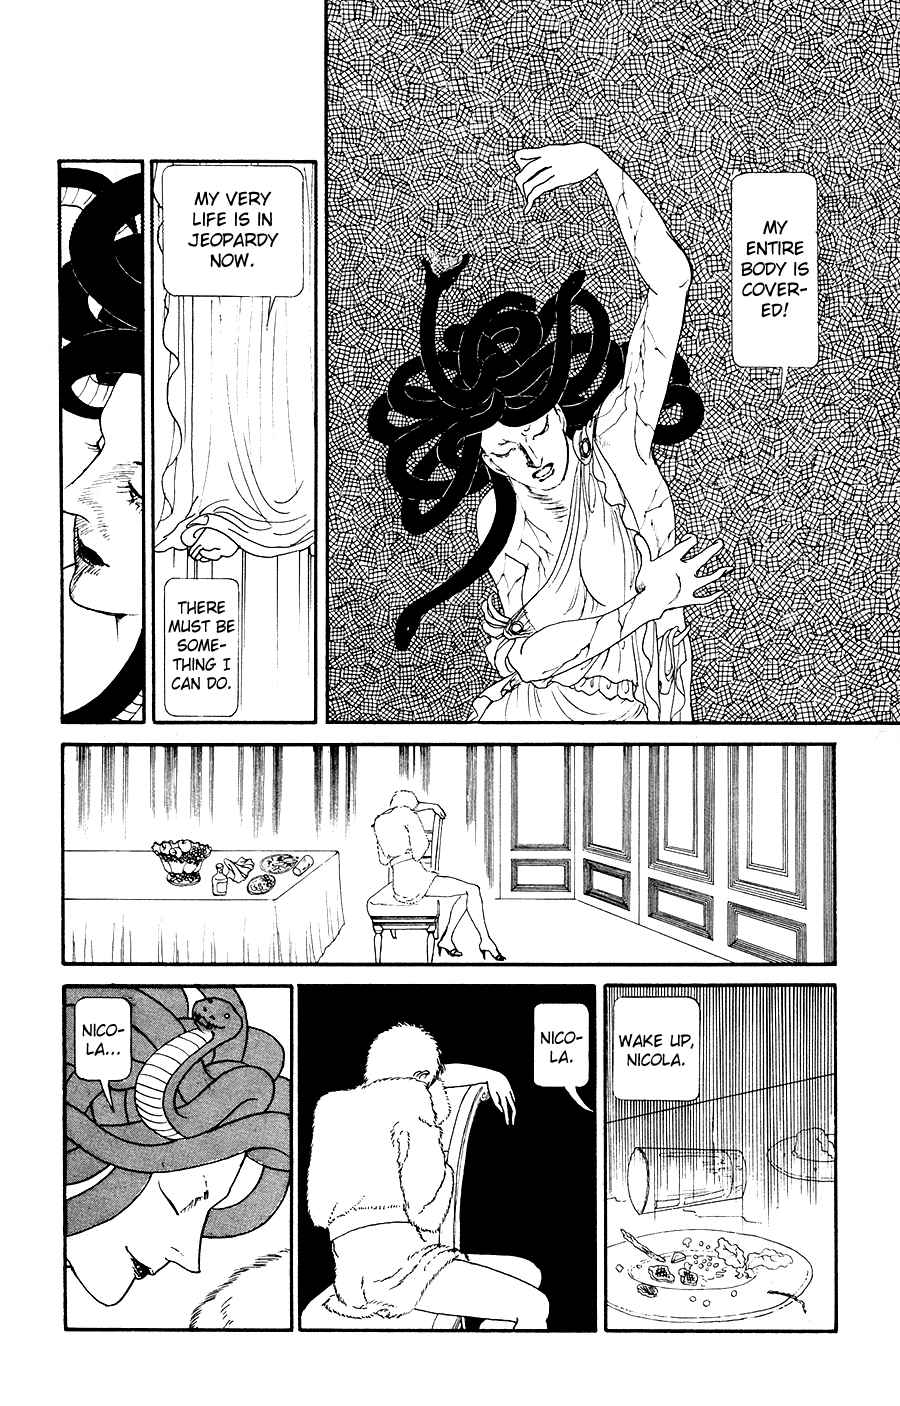 Medusa (Yamagishi Ryouko) Vol. 1 Ch. 1 Medusa